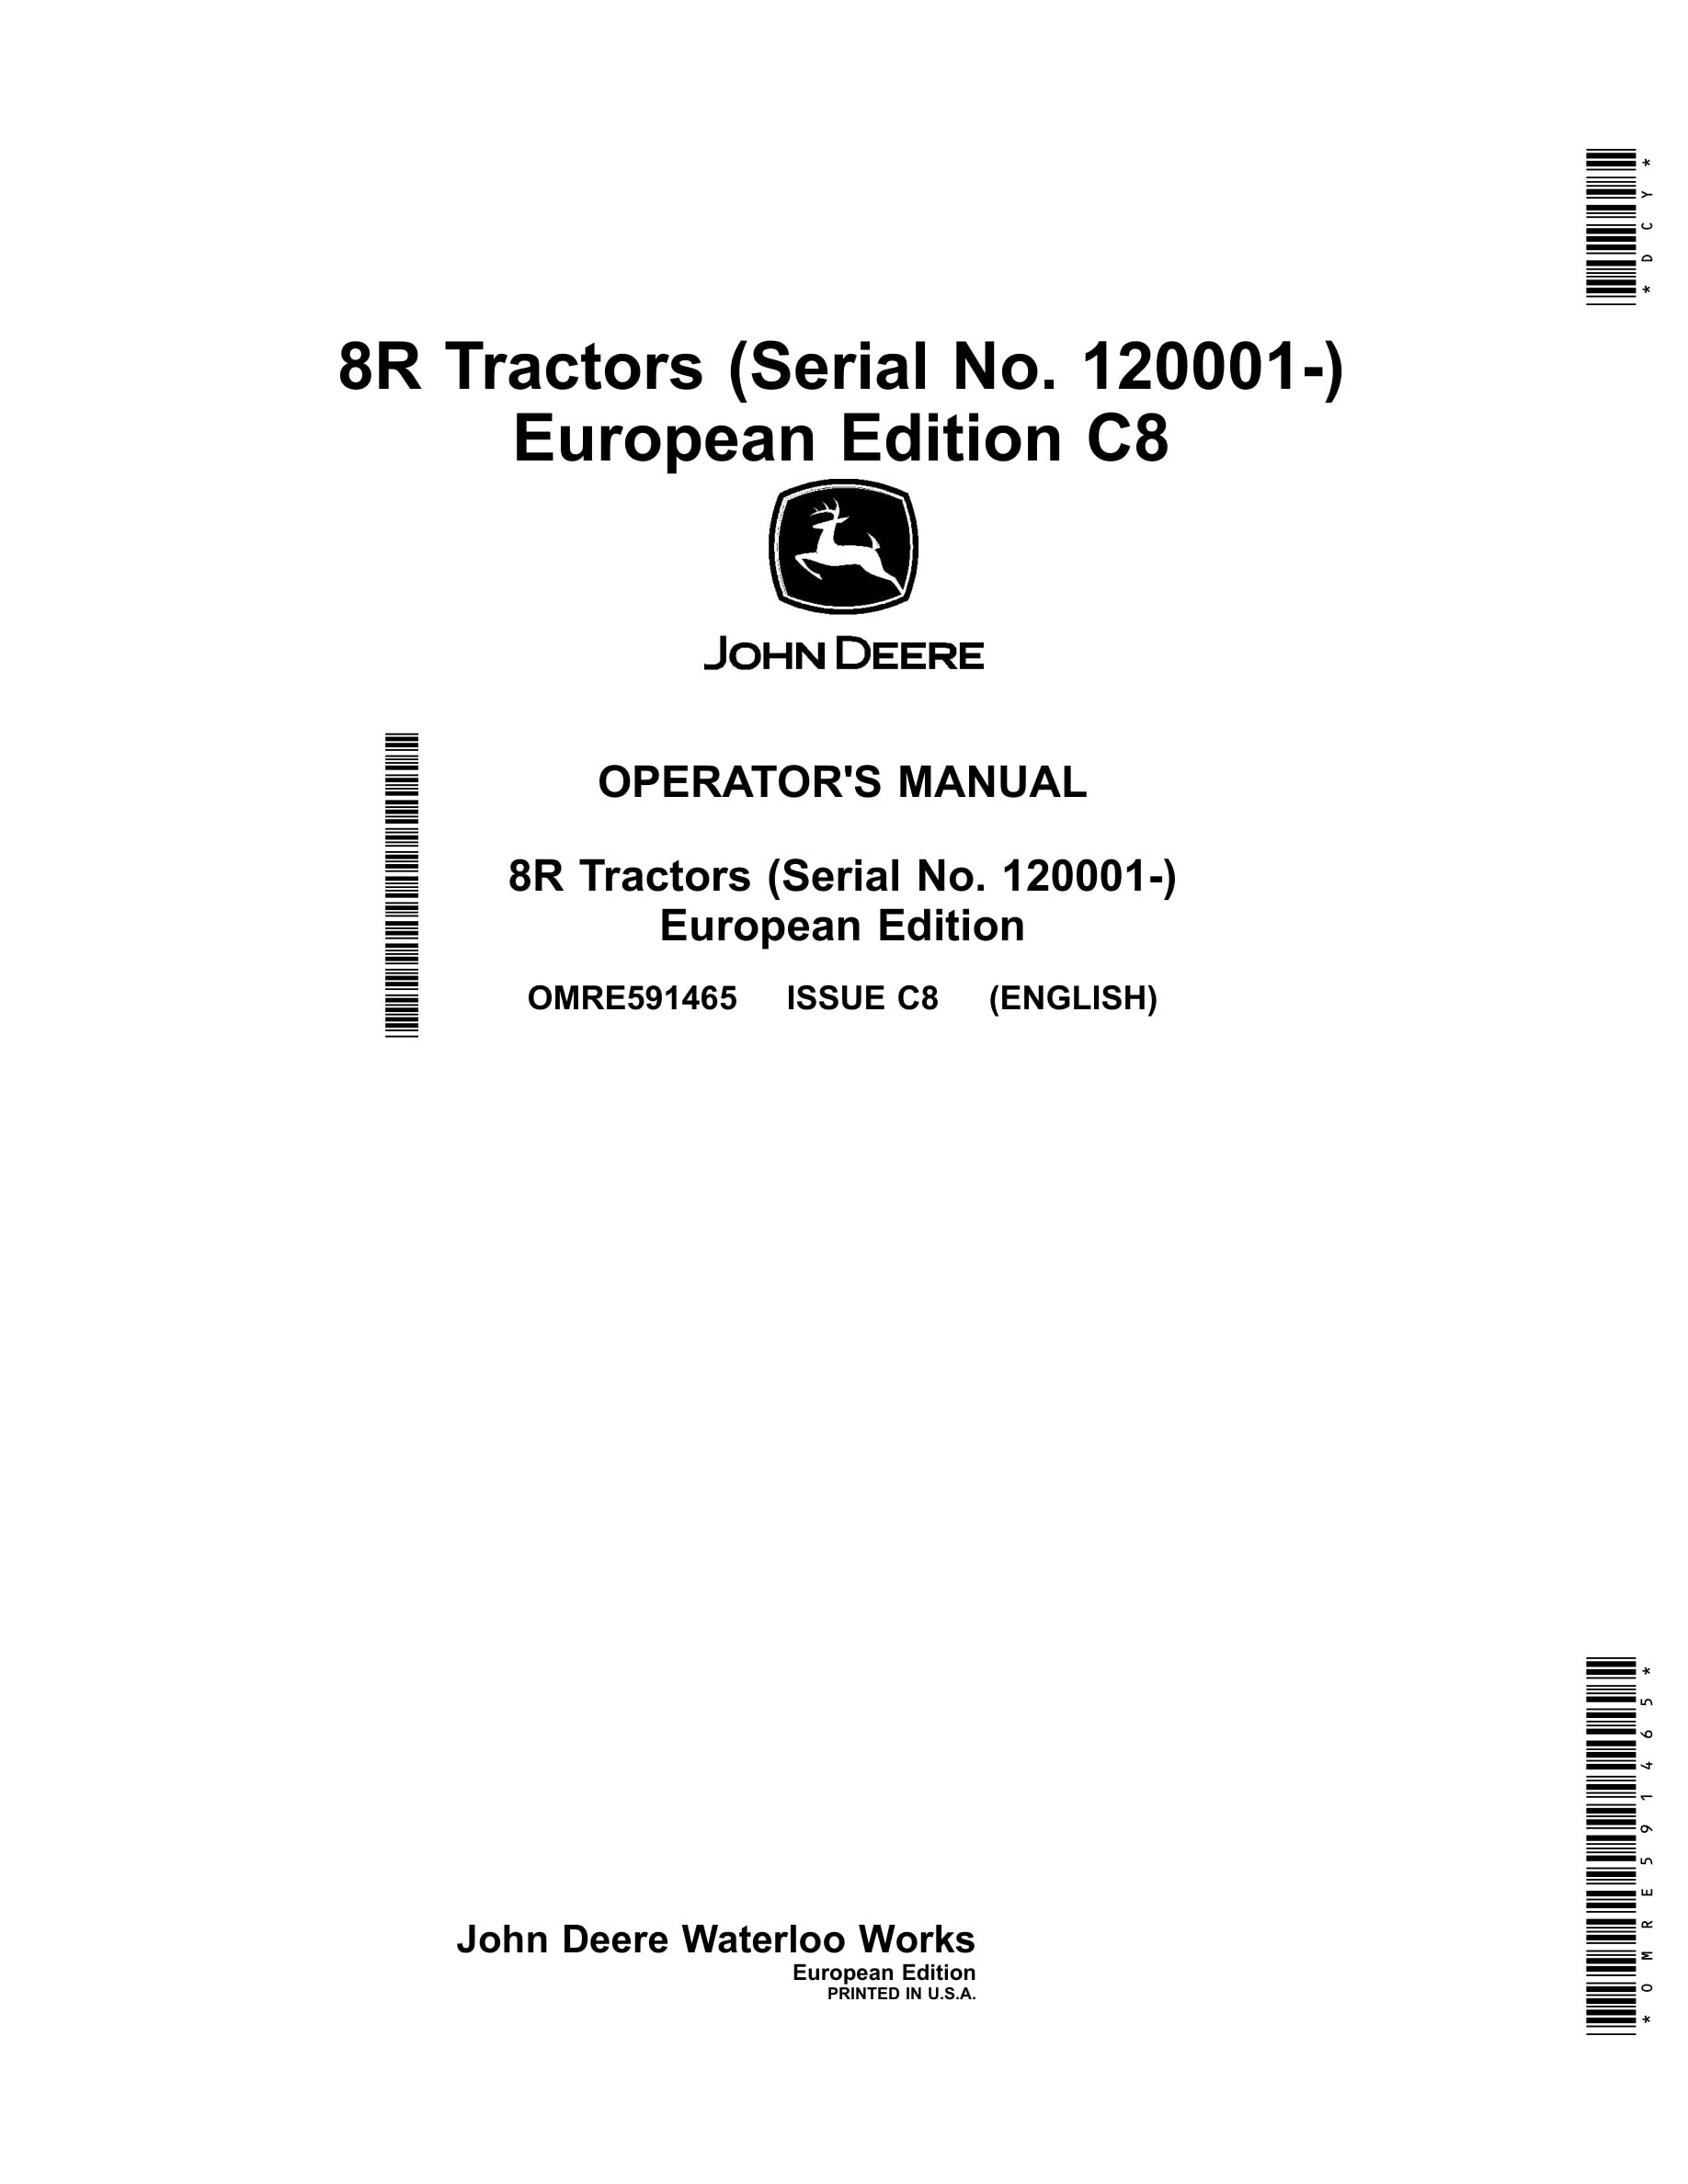 John Deere 8r Tractors Operator Manuals OMRE591465-1